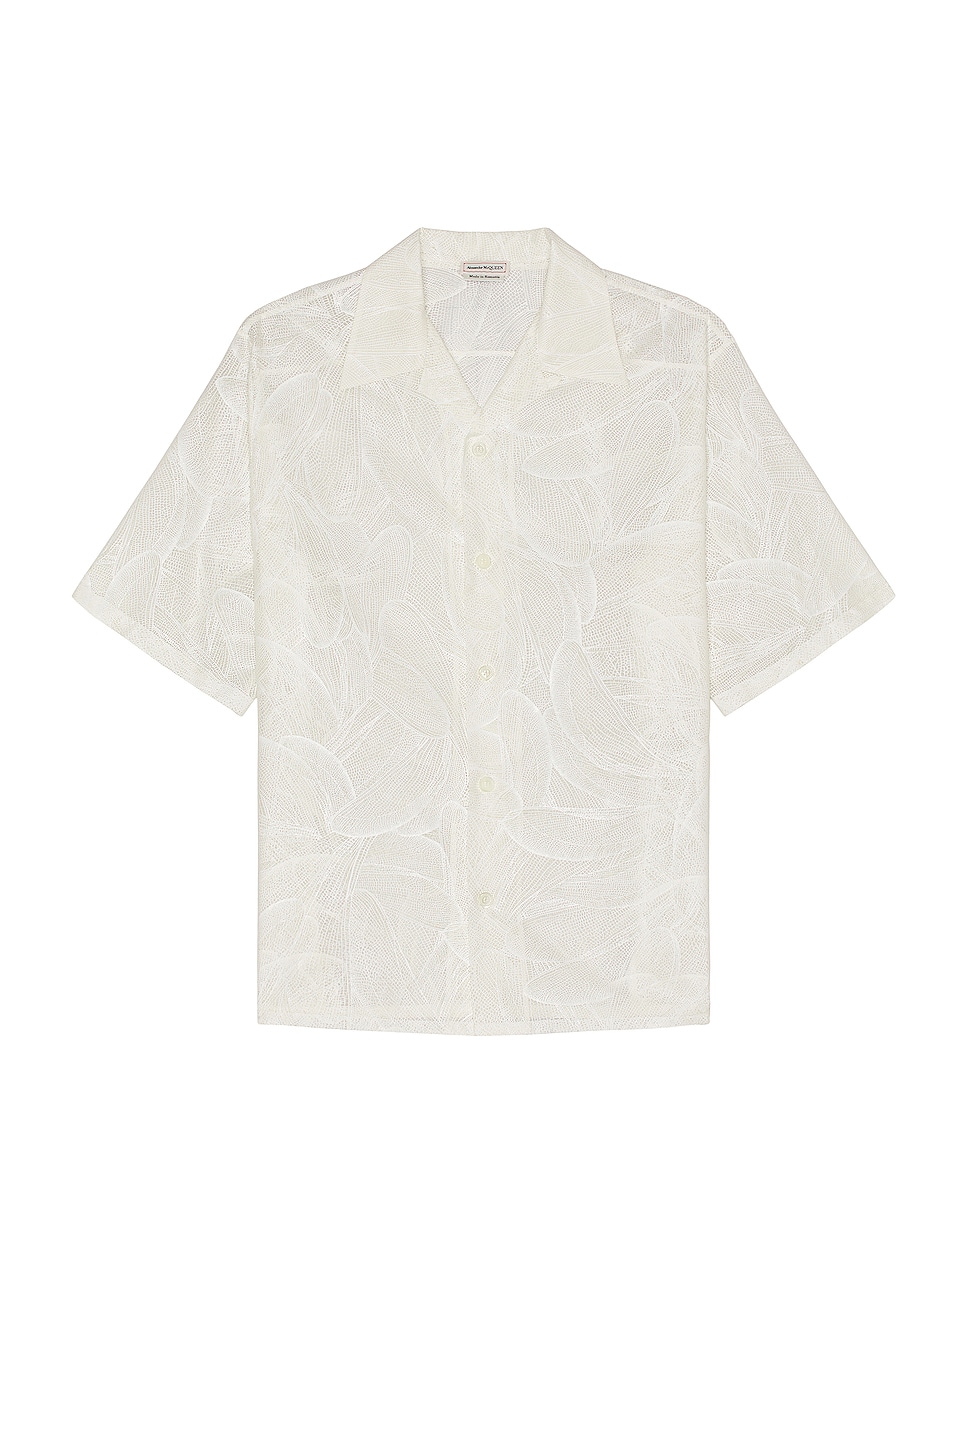 Image 1 of Alexander McQueen Printed Hawaiian Shirt in Optical White